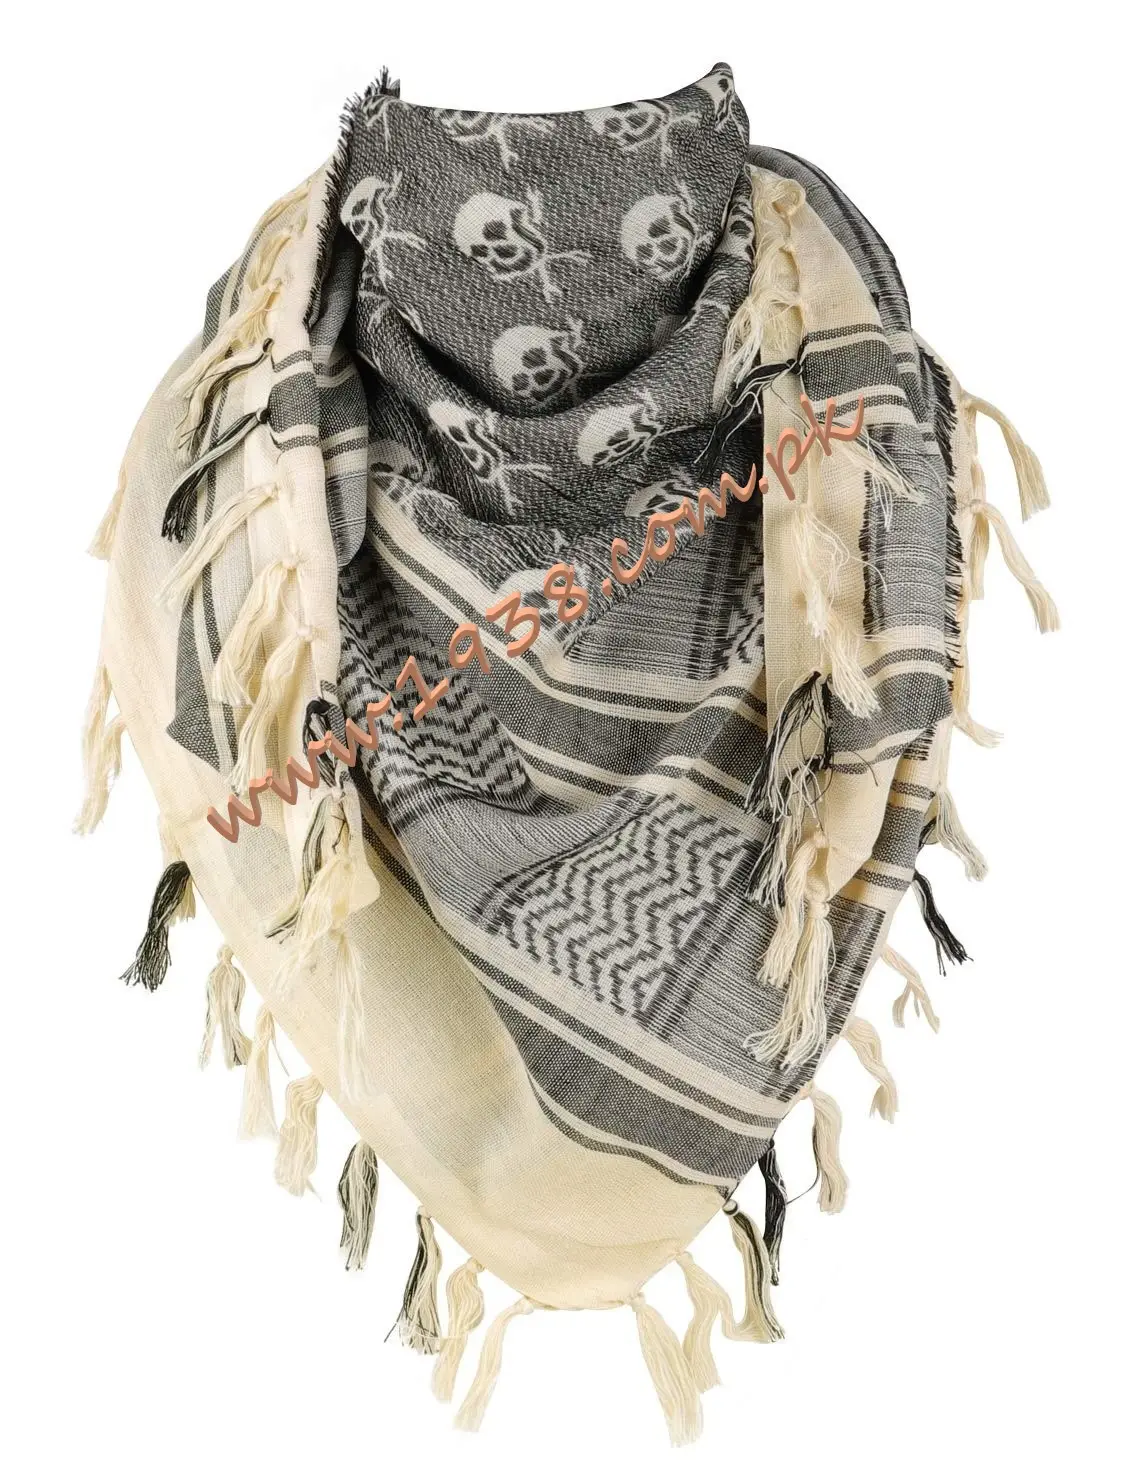 Bufanda del desierto árabe Shemagh, patrón de Calavera, accesorio de moda del desierto nómada árabe, Keffiyeh tradicional